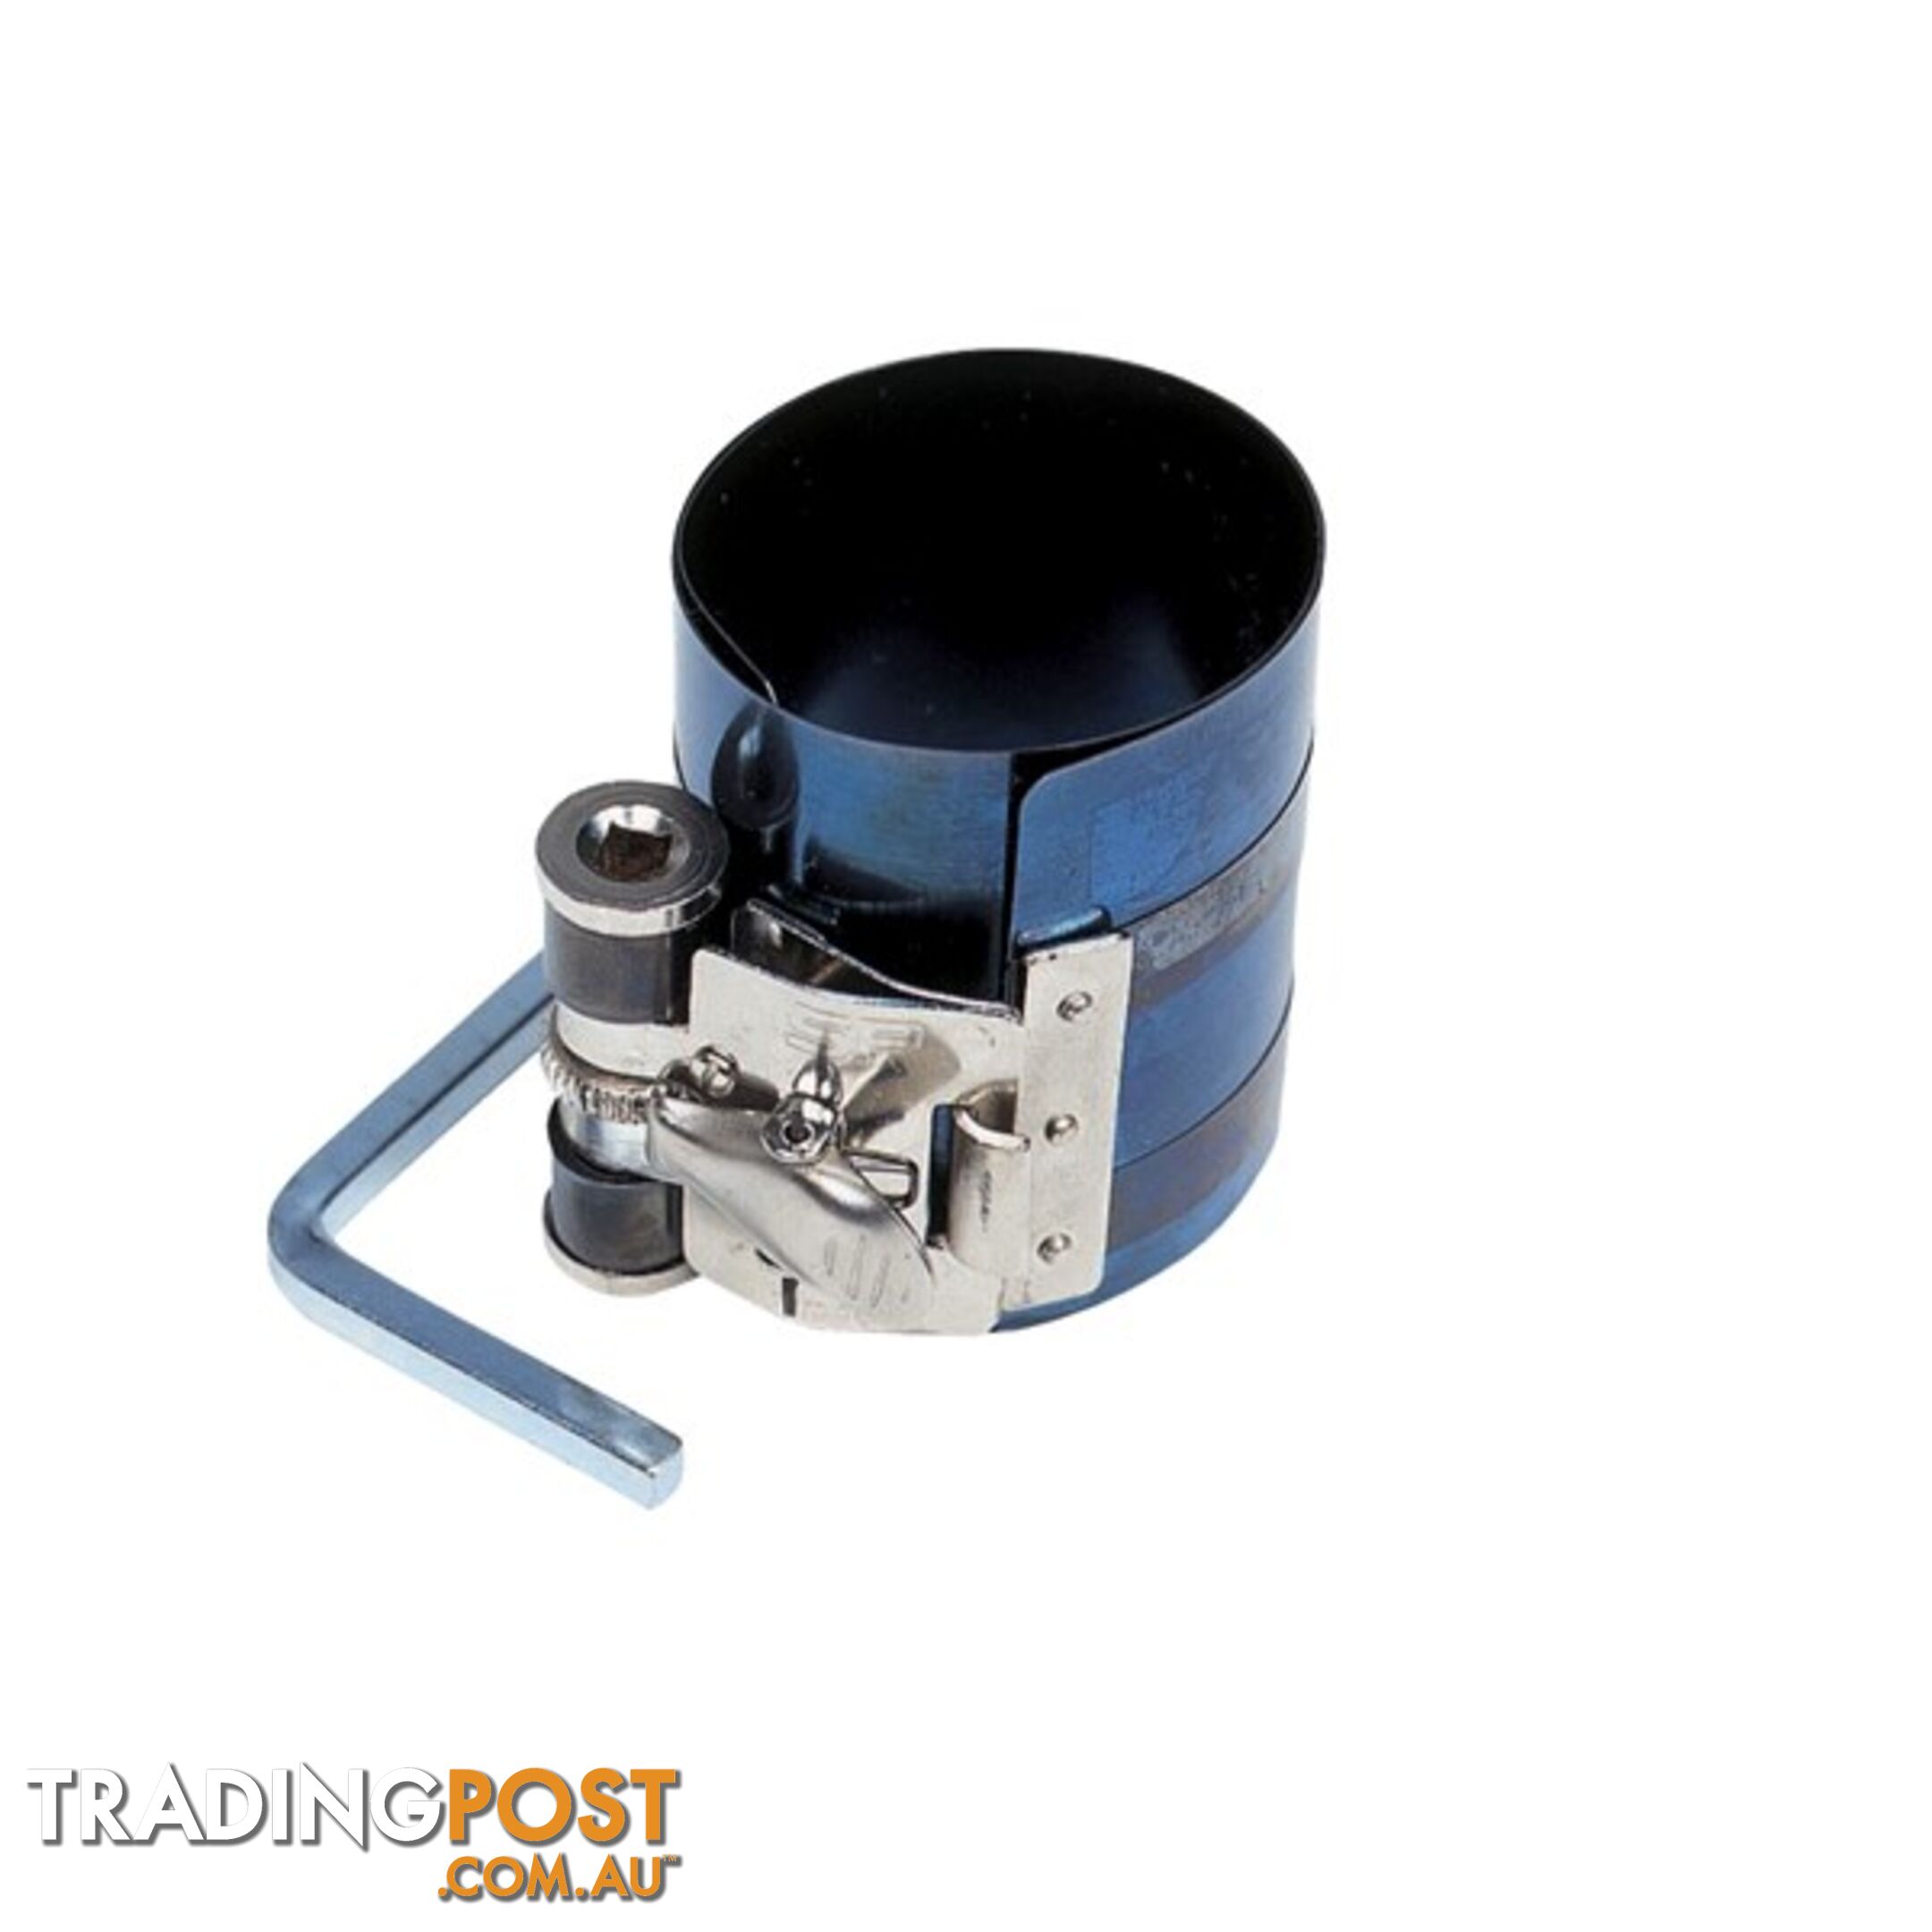 Piston Ring Compressor 90-175mm SKU - 660373